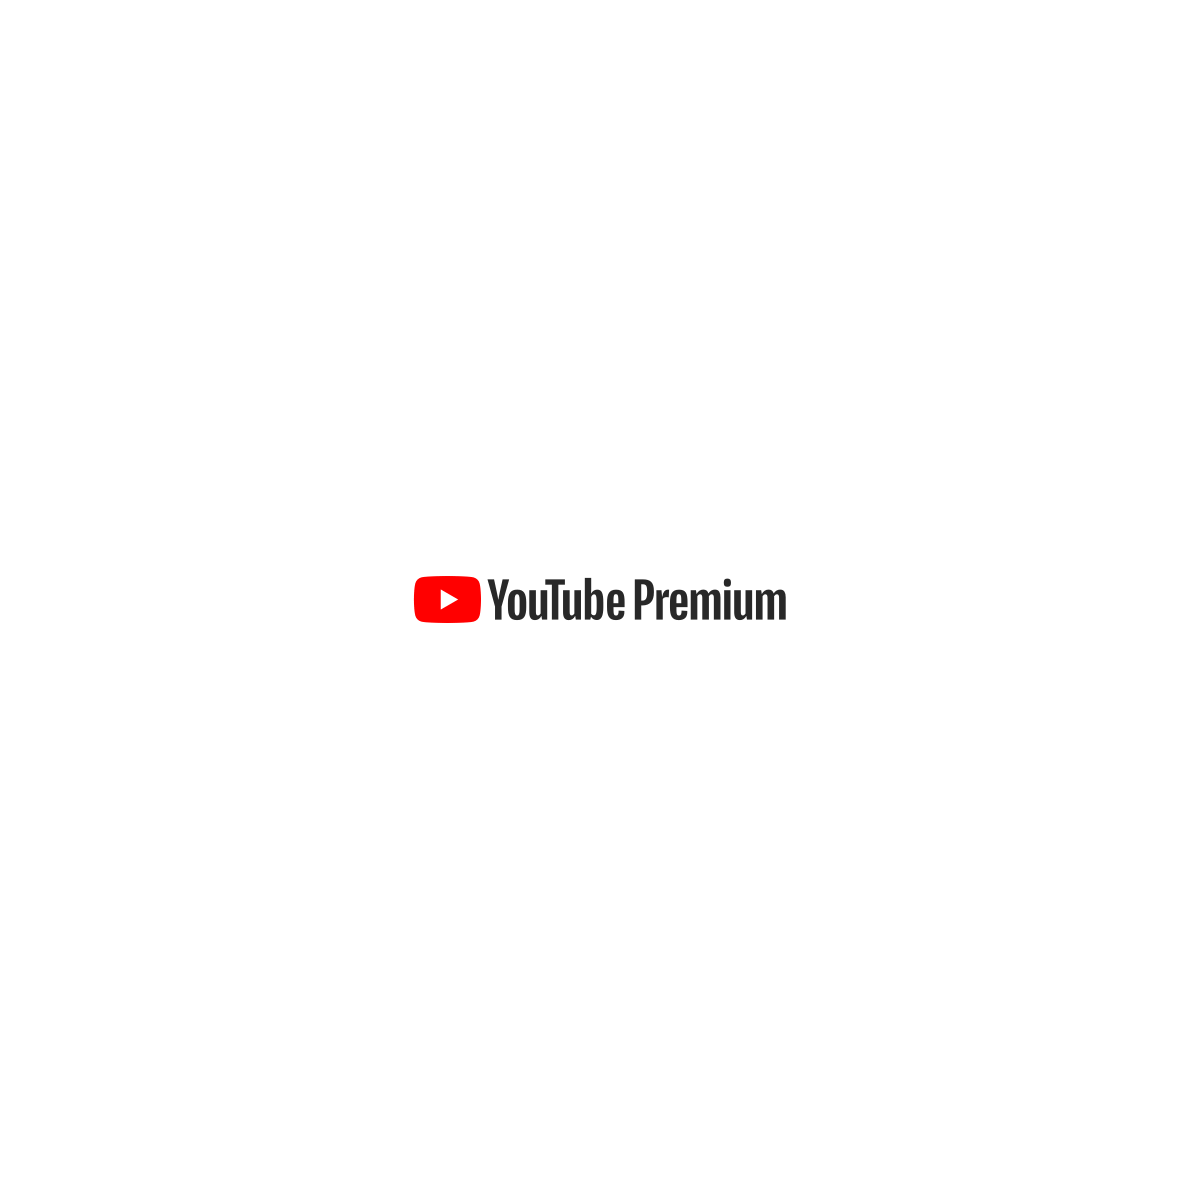 Red YouTube Logo - YouTube Premium - YouTube